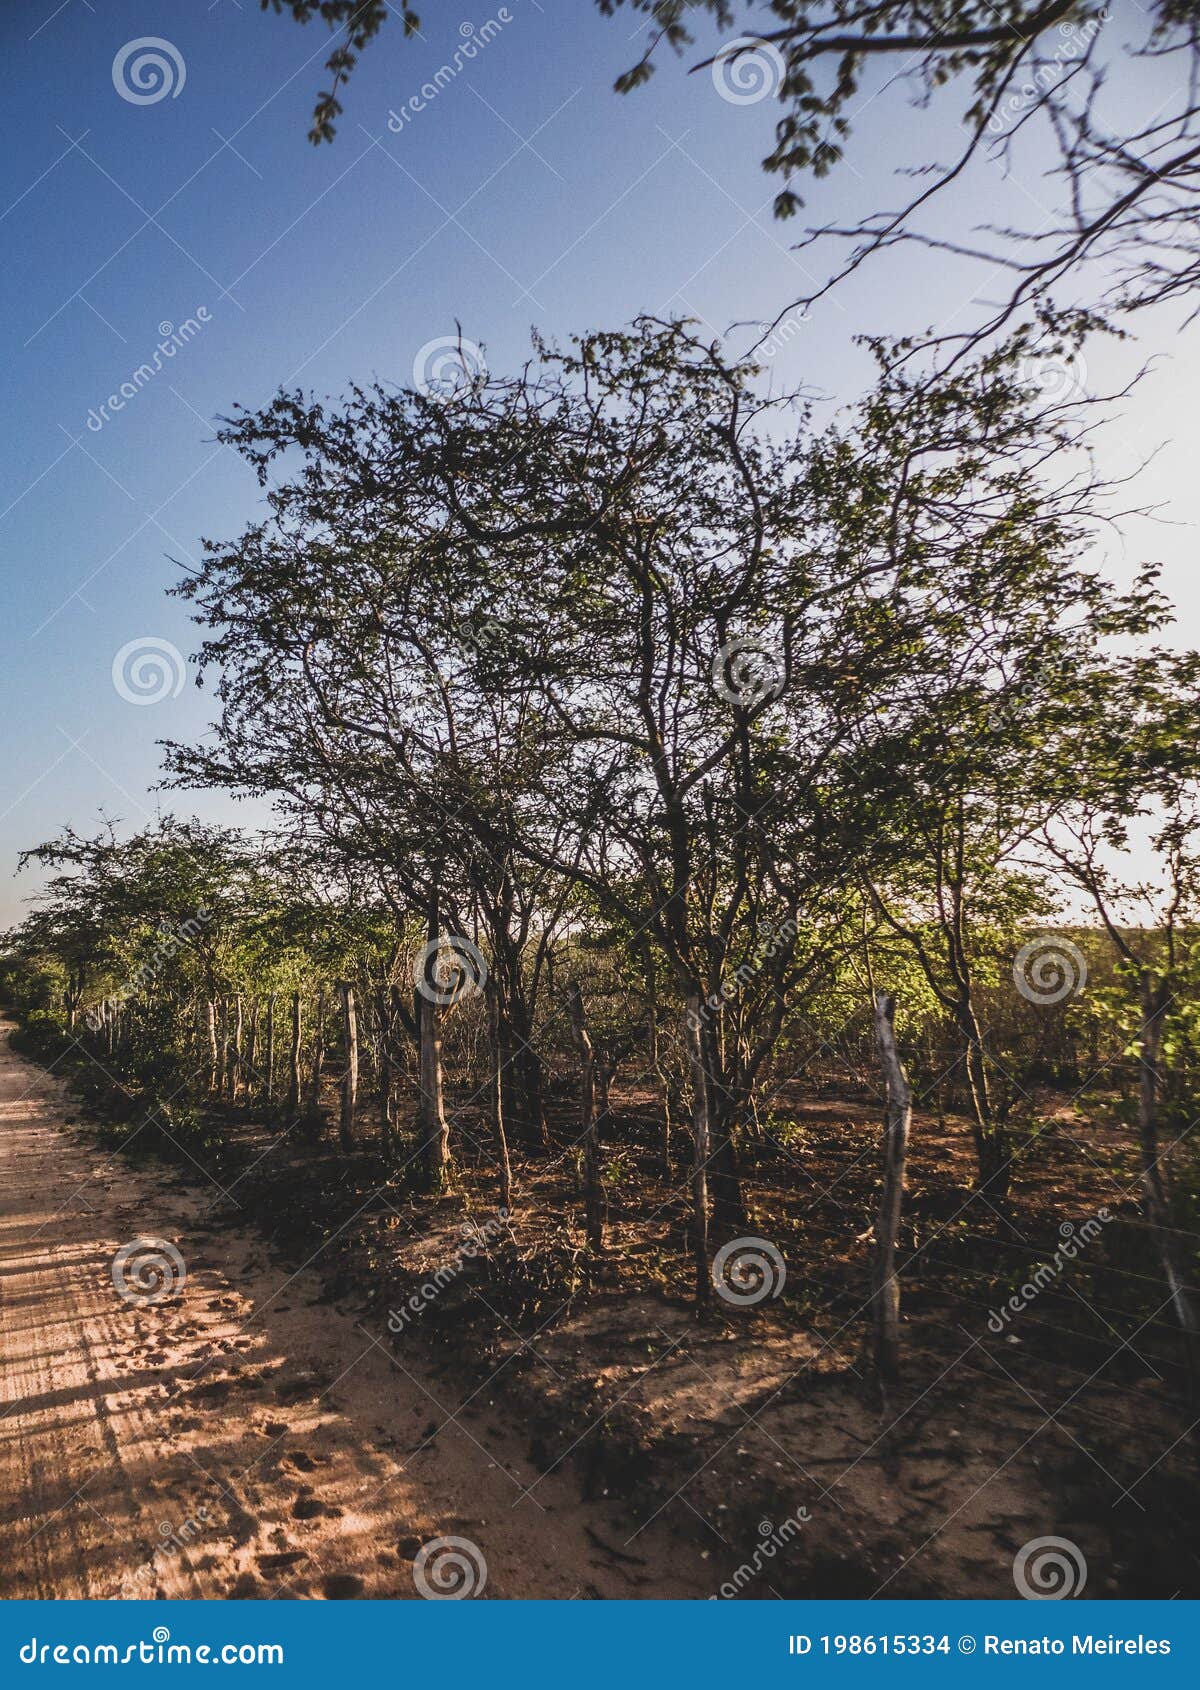 rural region of the brazilian northeastern interior. the semi-arid tropical climate has the caatinga as a vegetation biome.